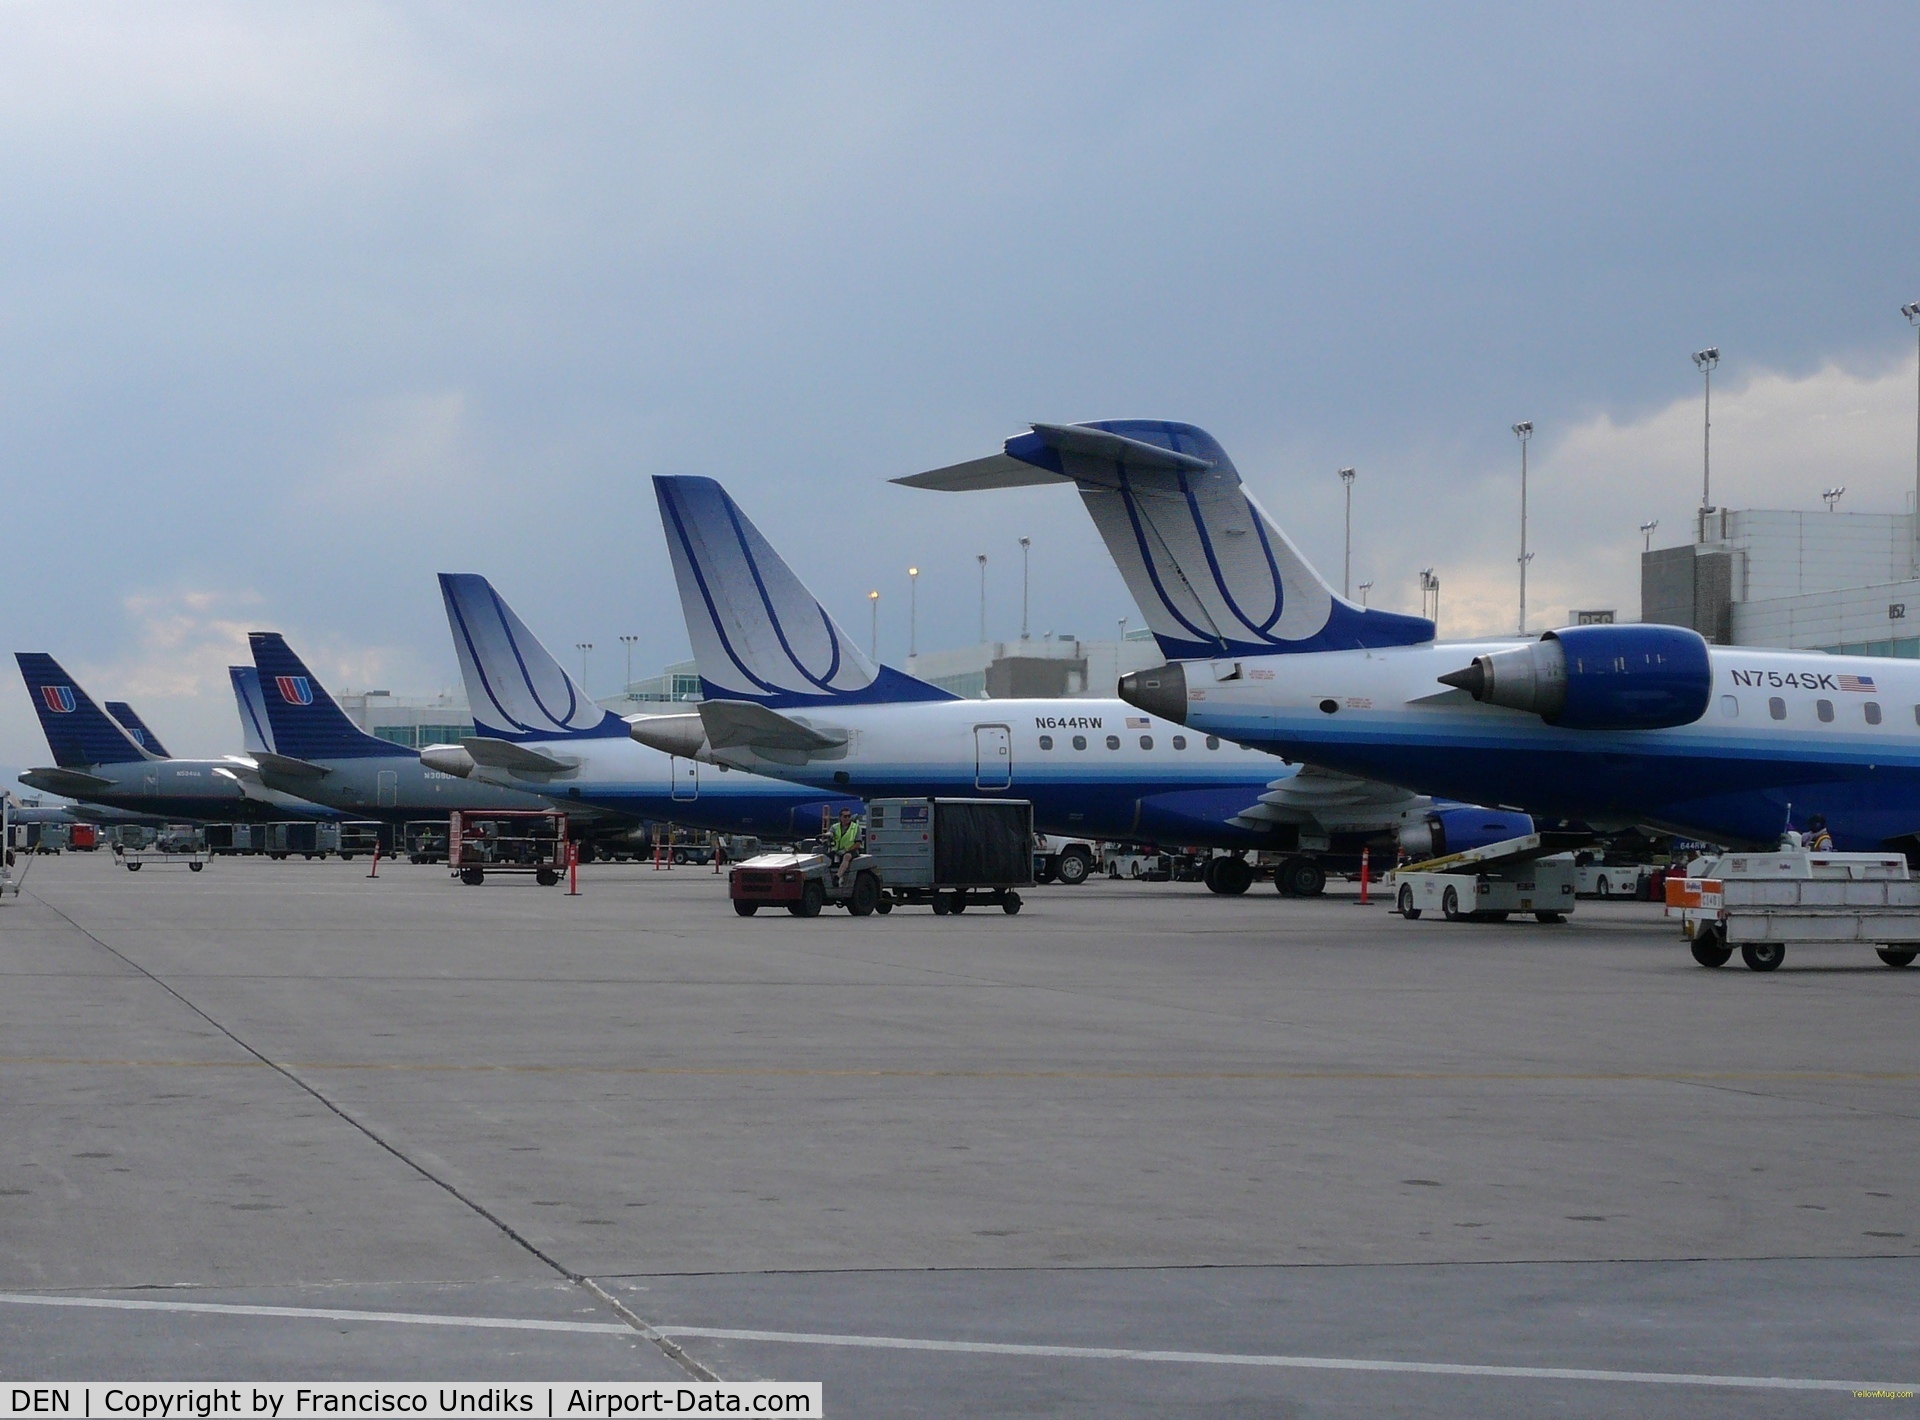 Denver International Airport (DEN) - UAX and UAL.